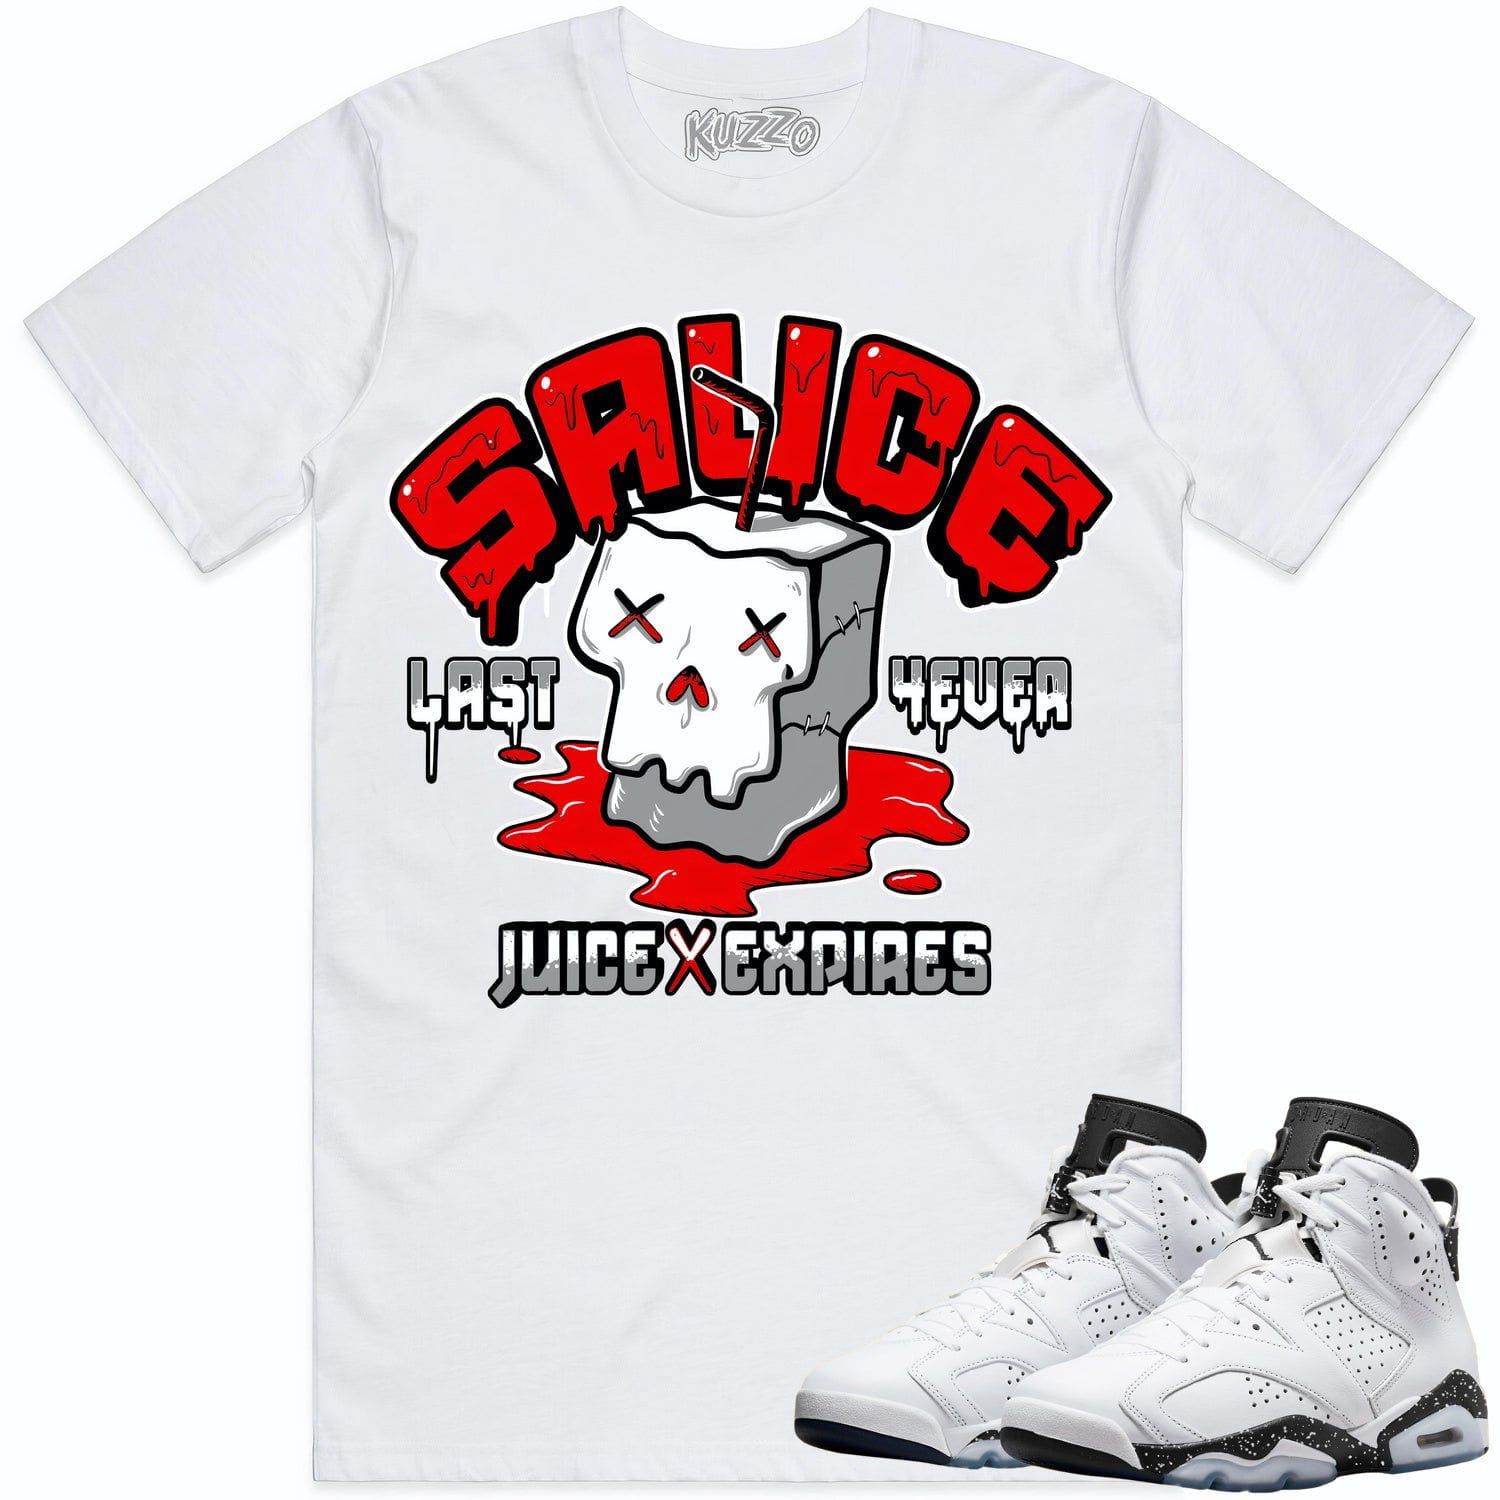 Oreo 6s Shirts - Jordan 6 Reverse Oreo 6s Sneaker Tees - Sauce